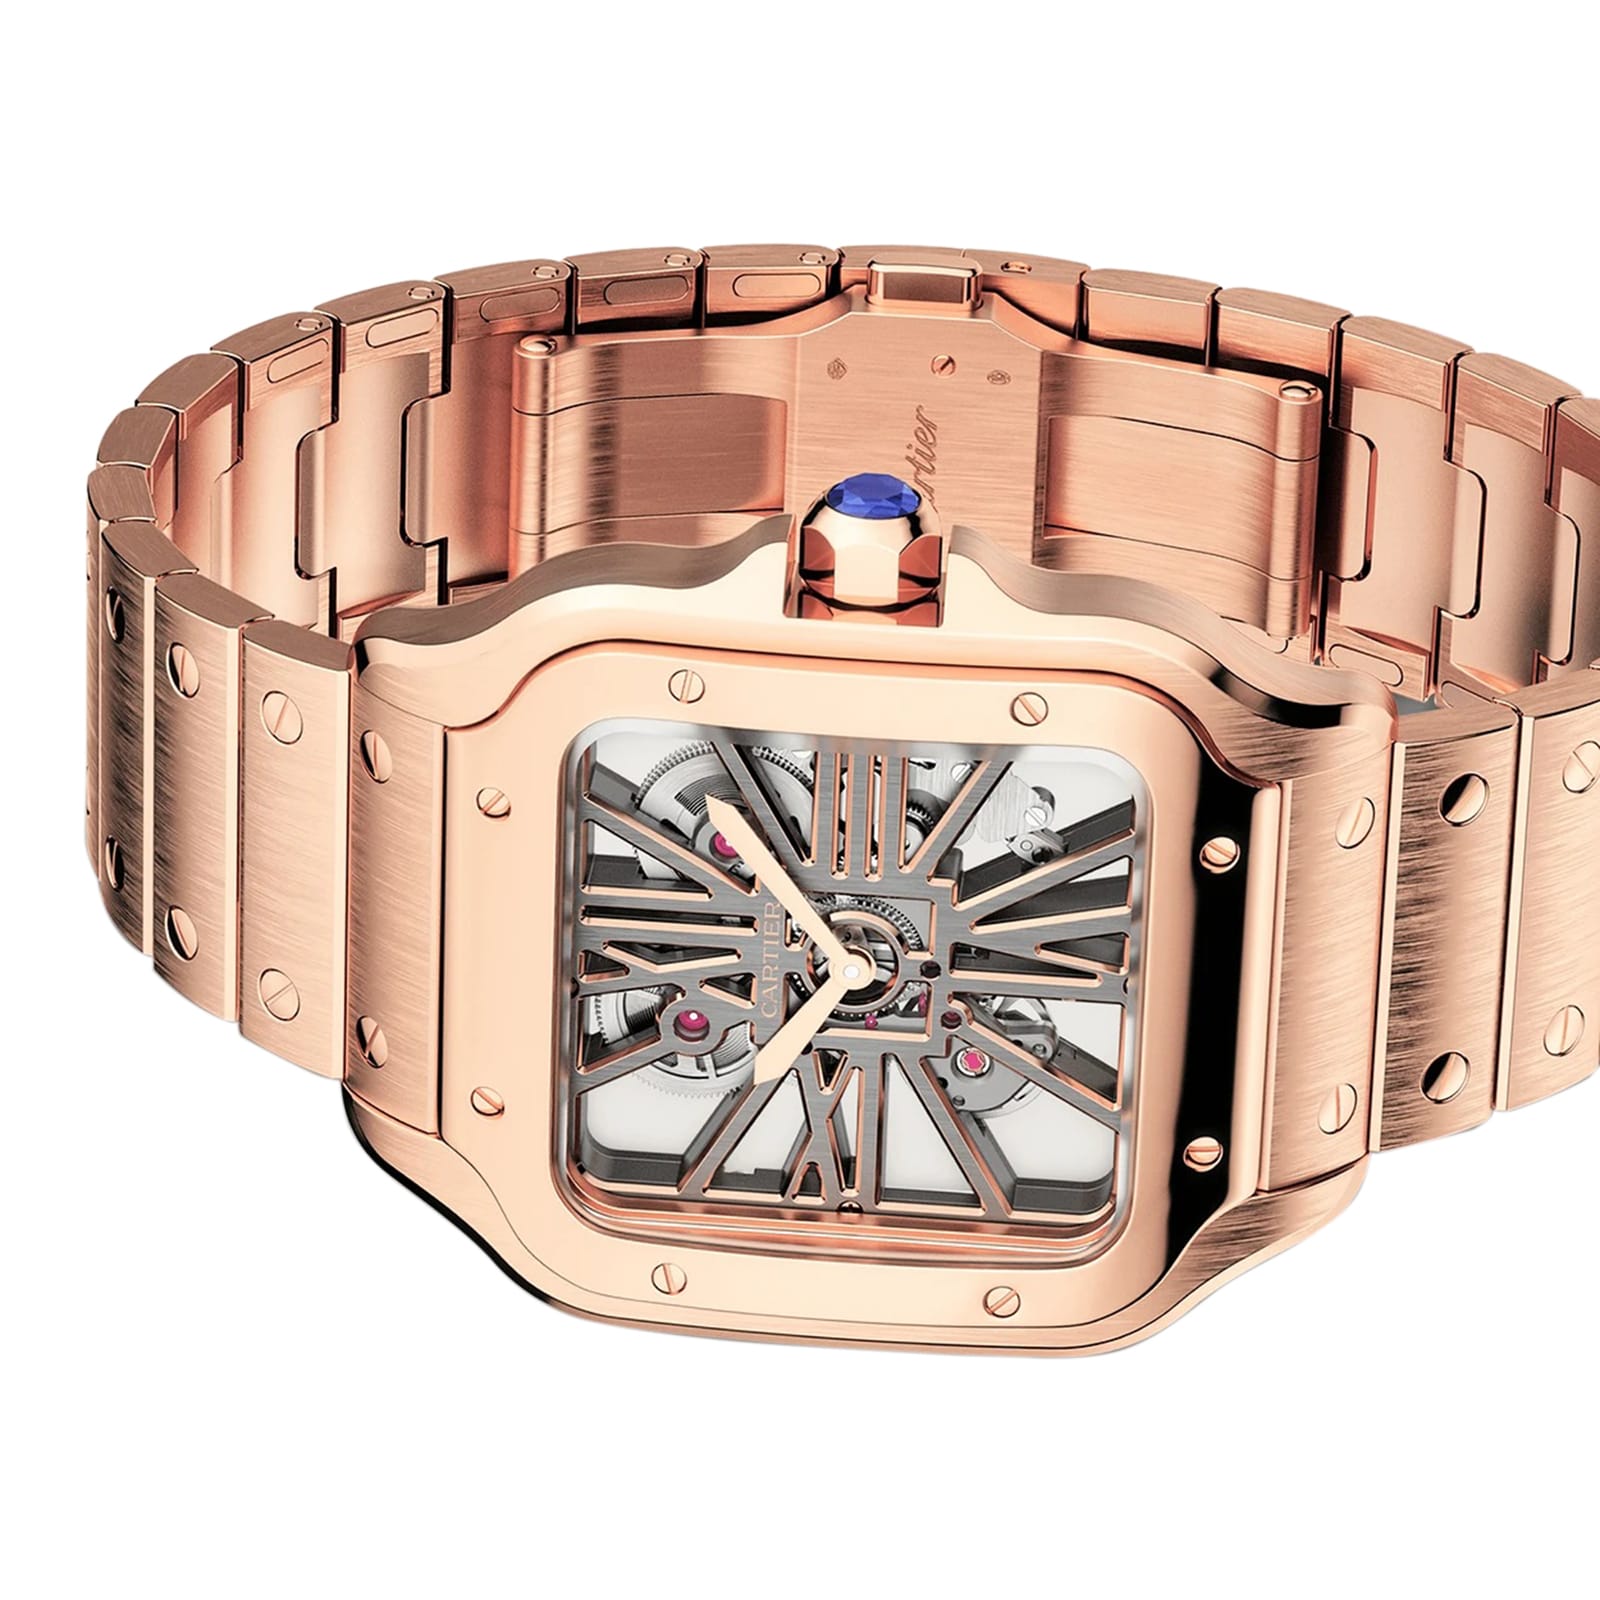 CRWJPA0013 - Pasha de Cartier watch - 35 mm, automatic movement, rose gold,  diamonds, interchangeable metal and leather straps - Cartier